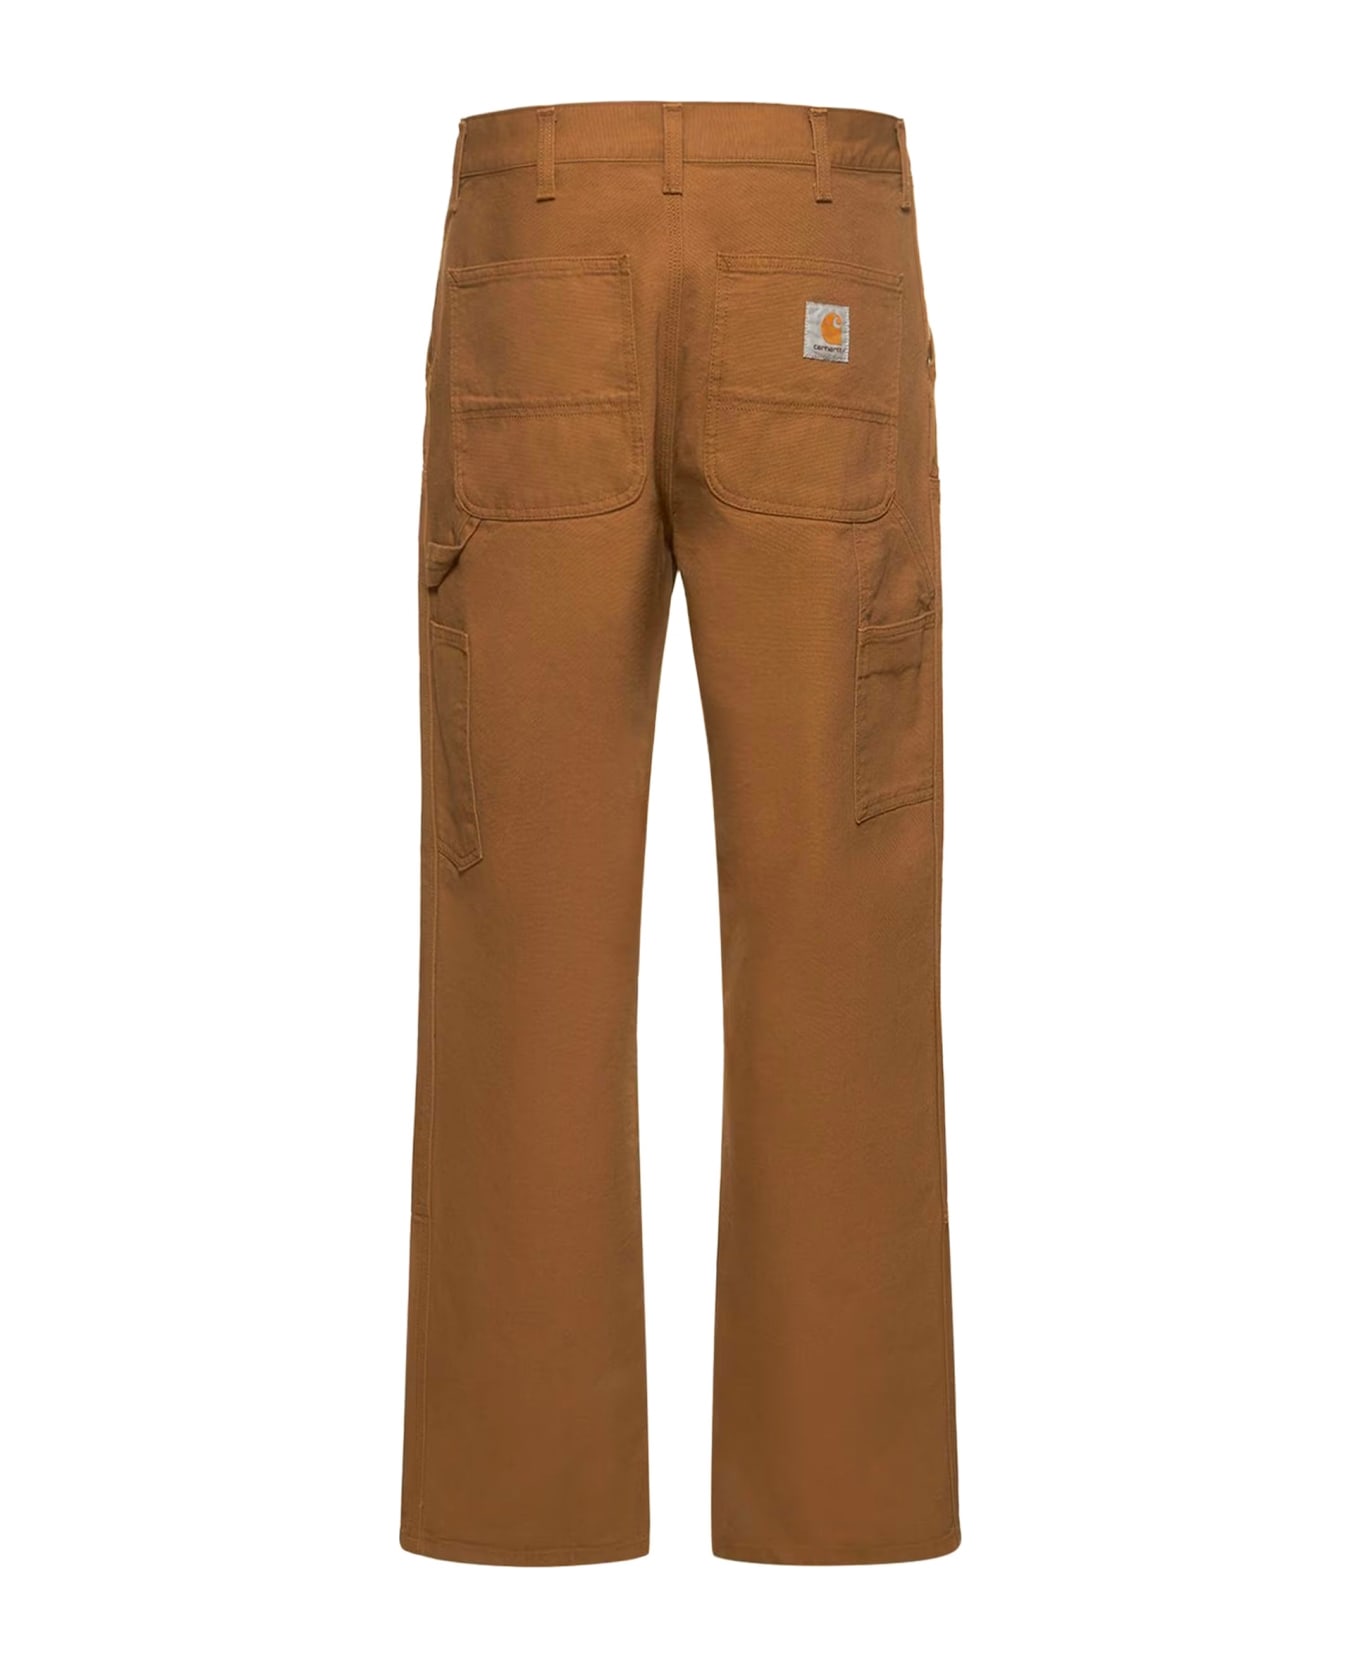 Carhartt Trousers Brown - Brown